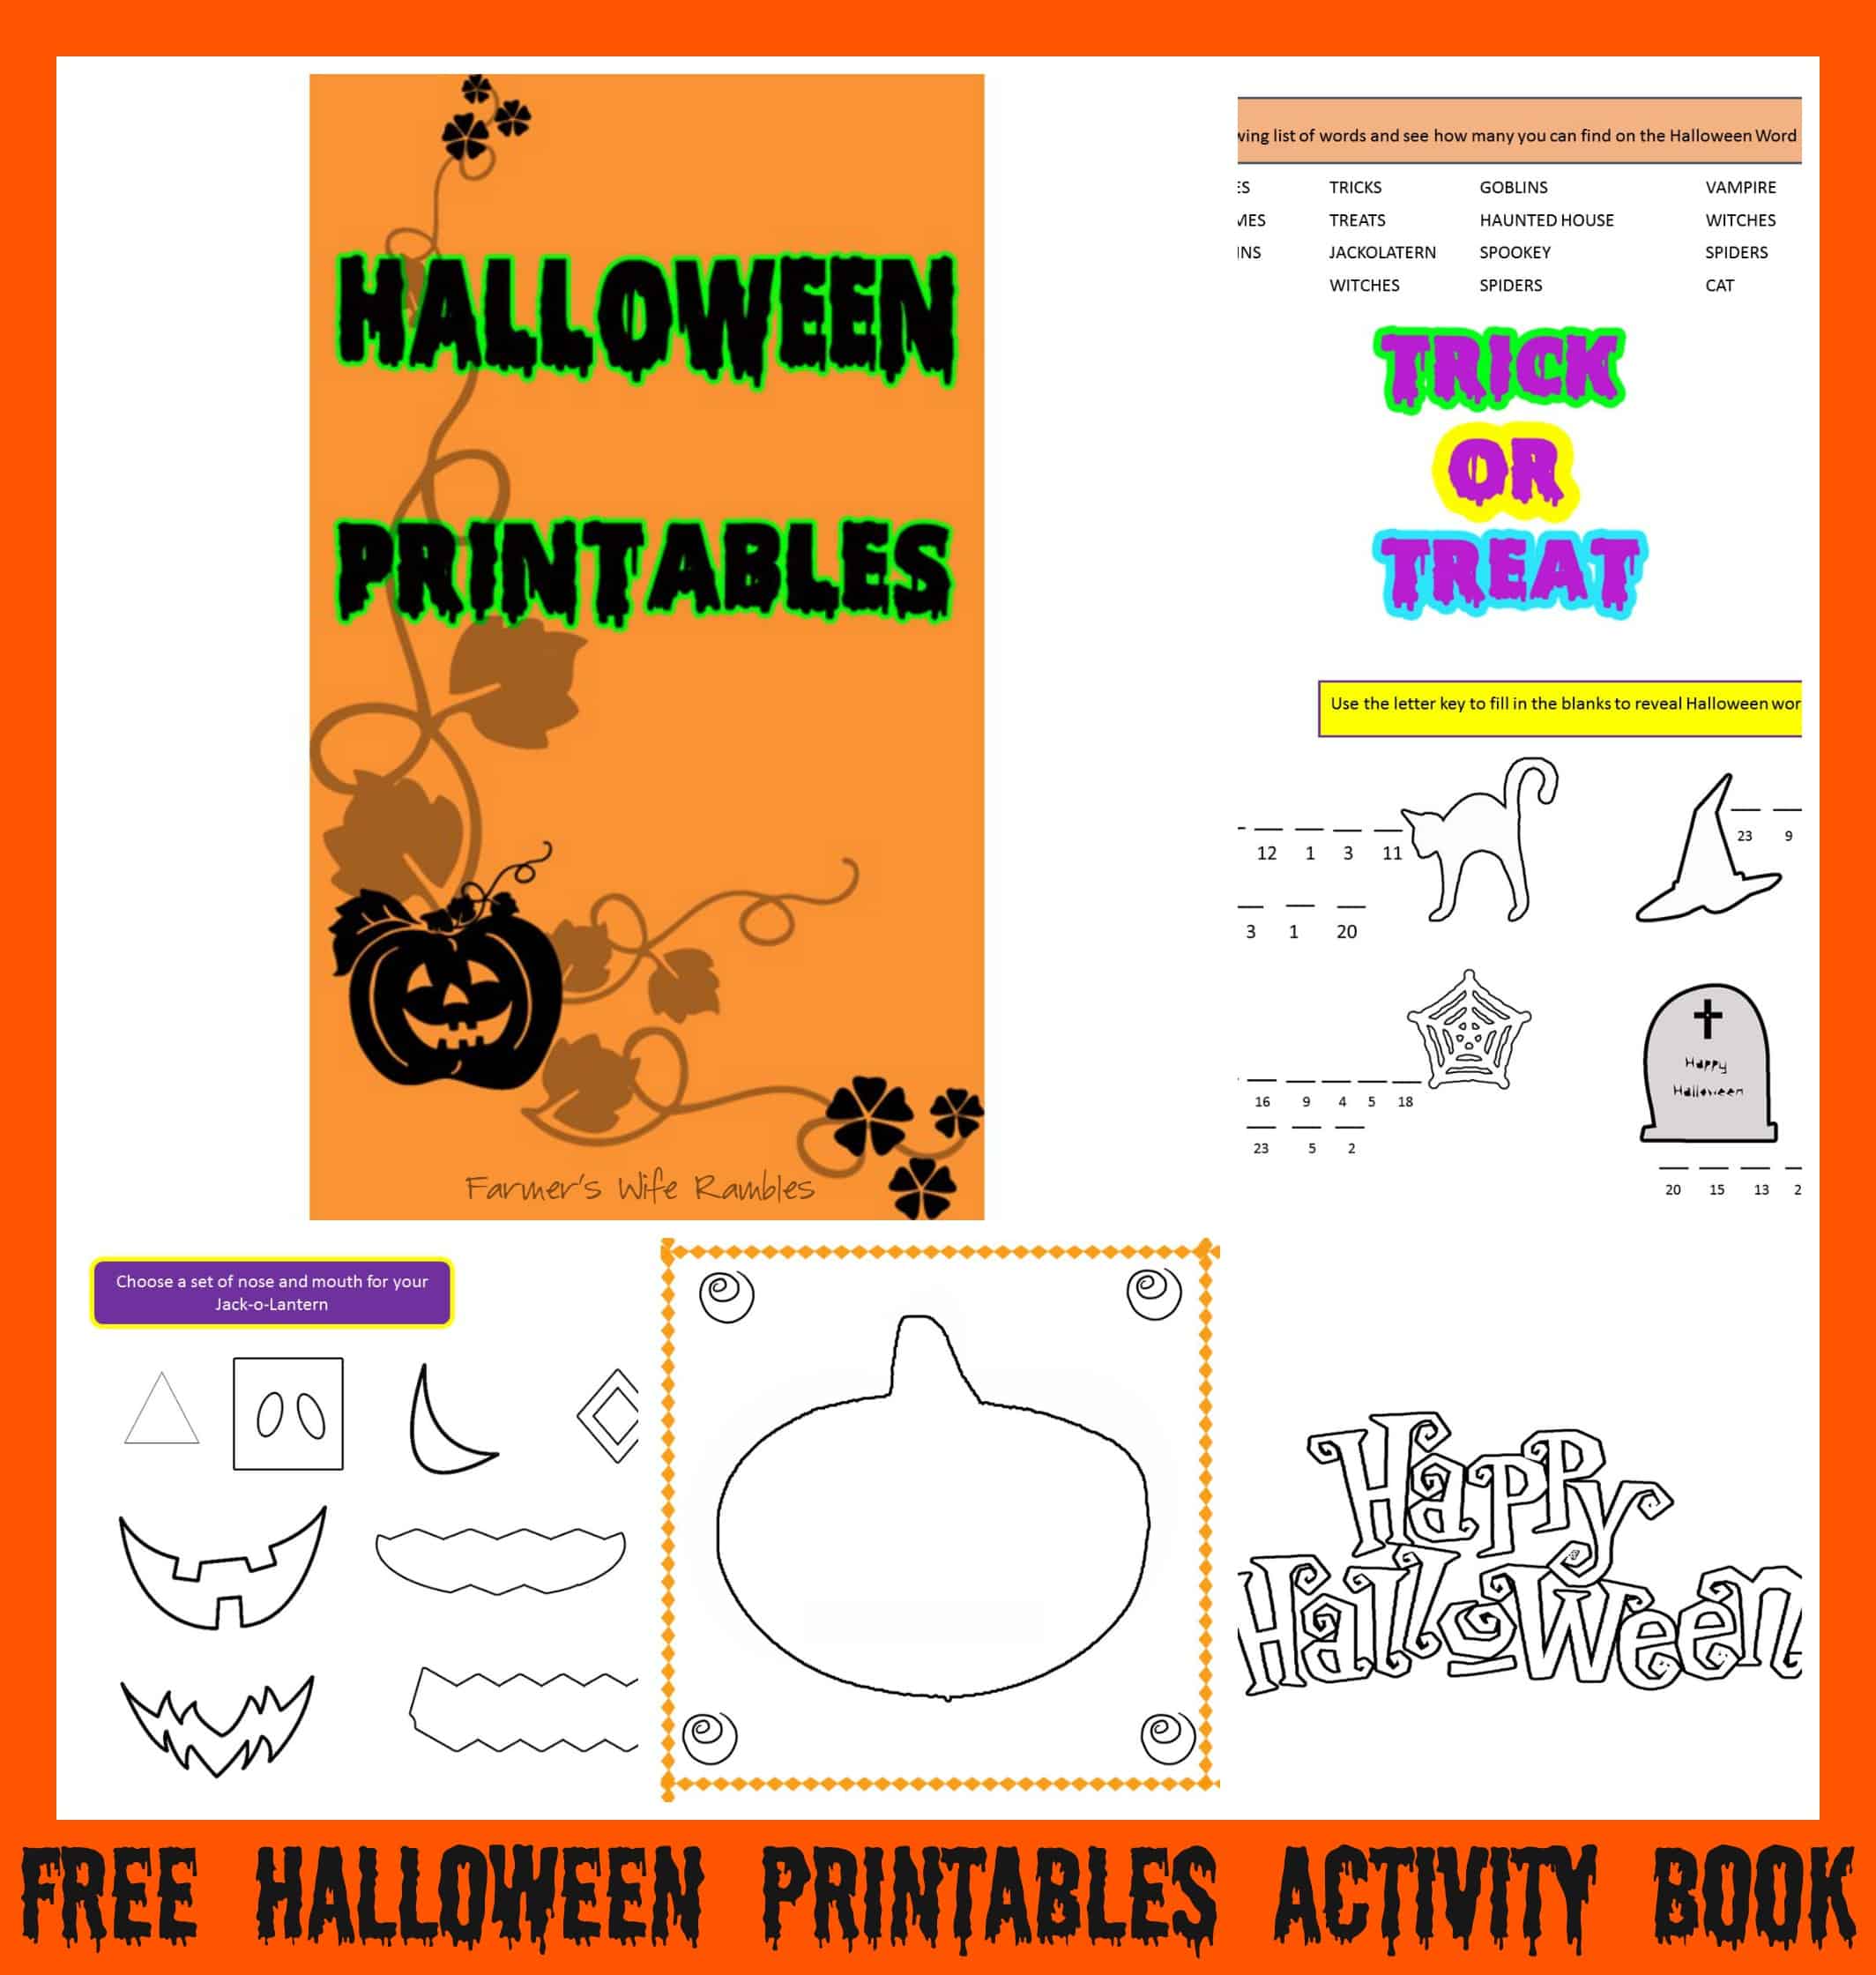 Free Halloween Printables Activity Book